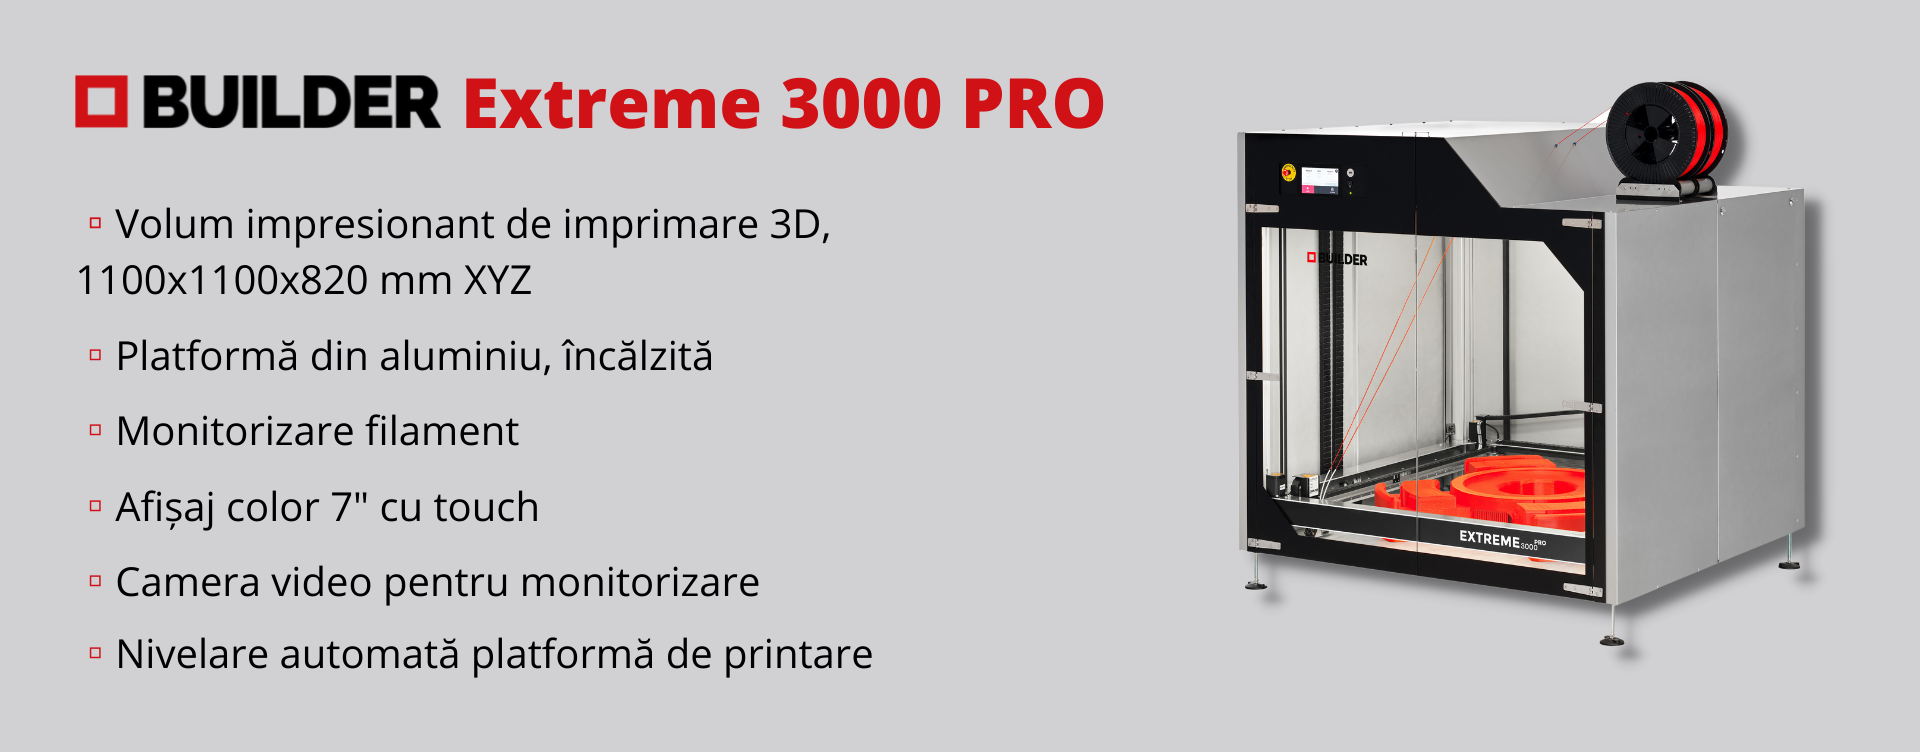 Builder Extreme 3000 Pro